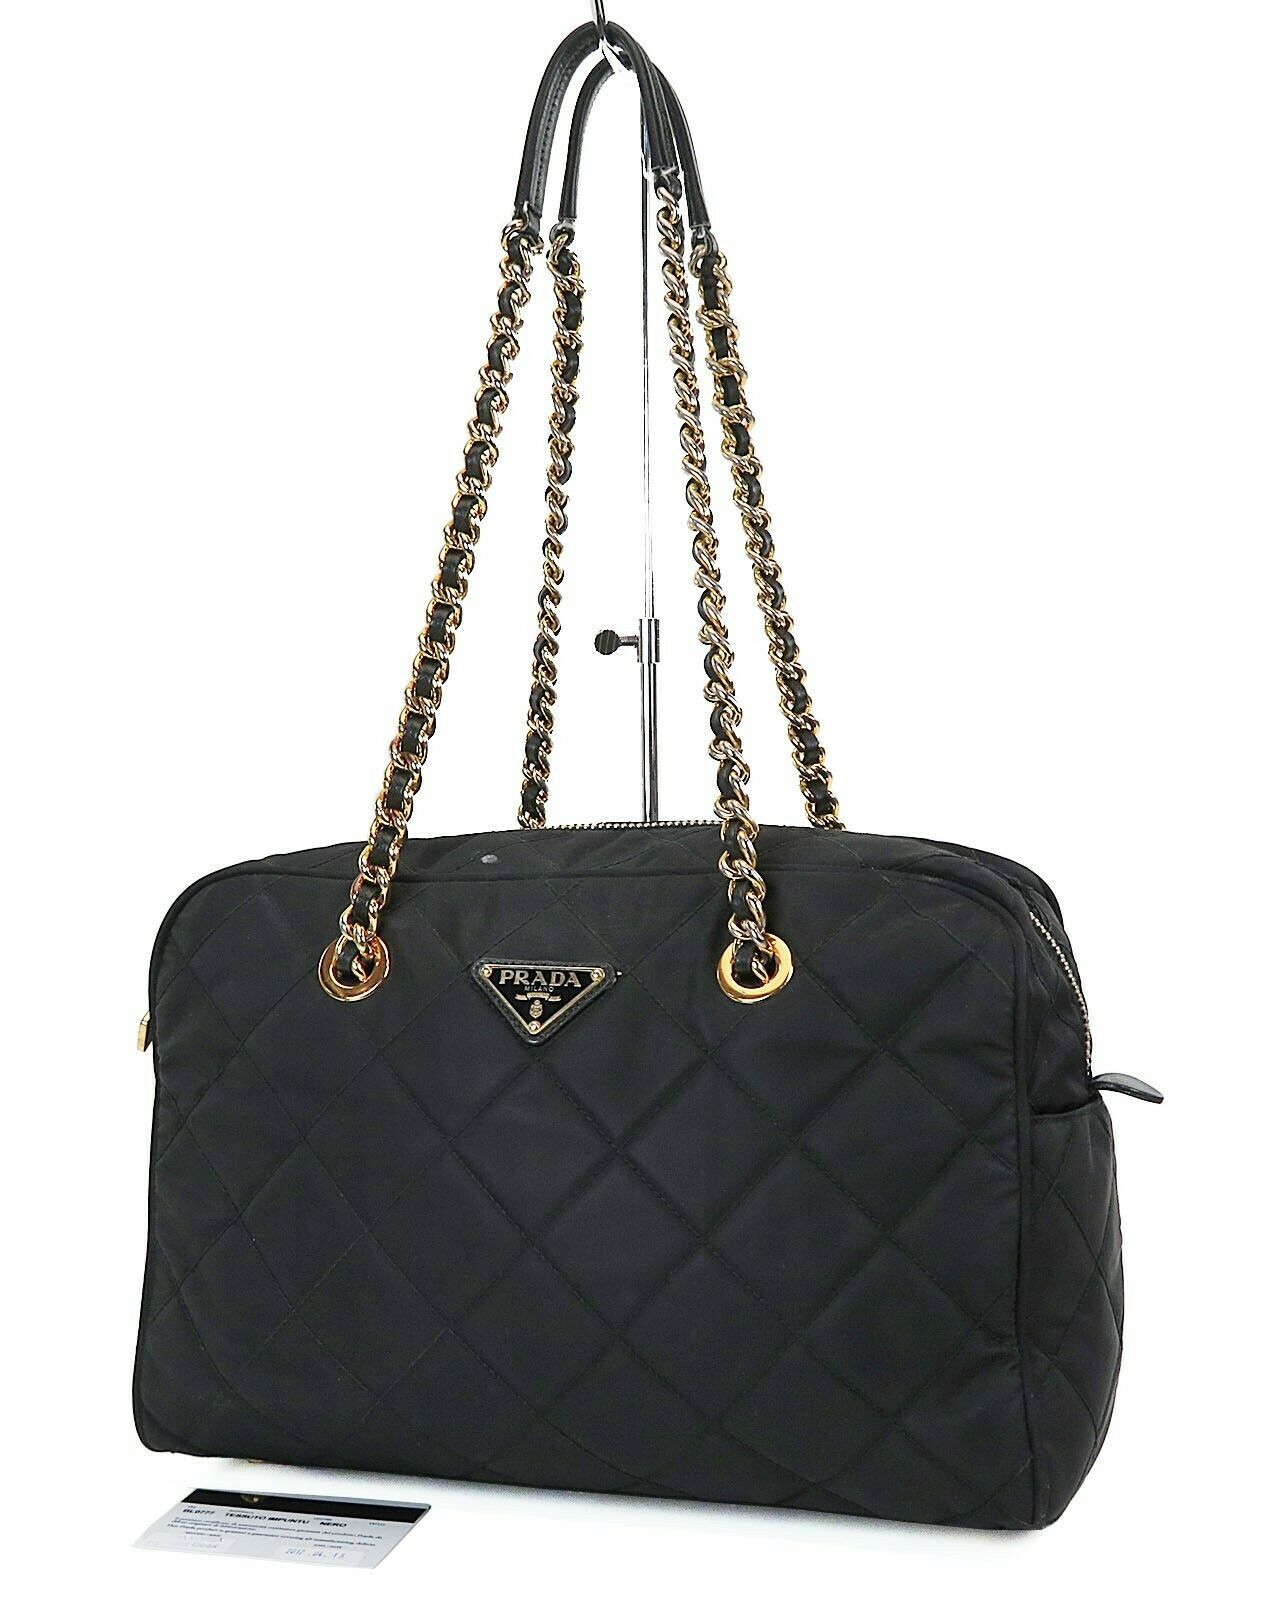 Authentic PRADA Black Quilted Nylon Chain Shoulder Bag Purse #37317 ...